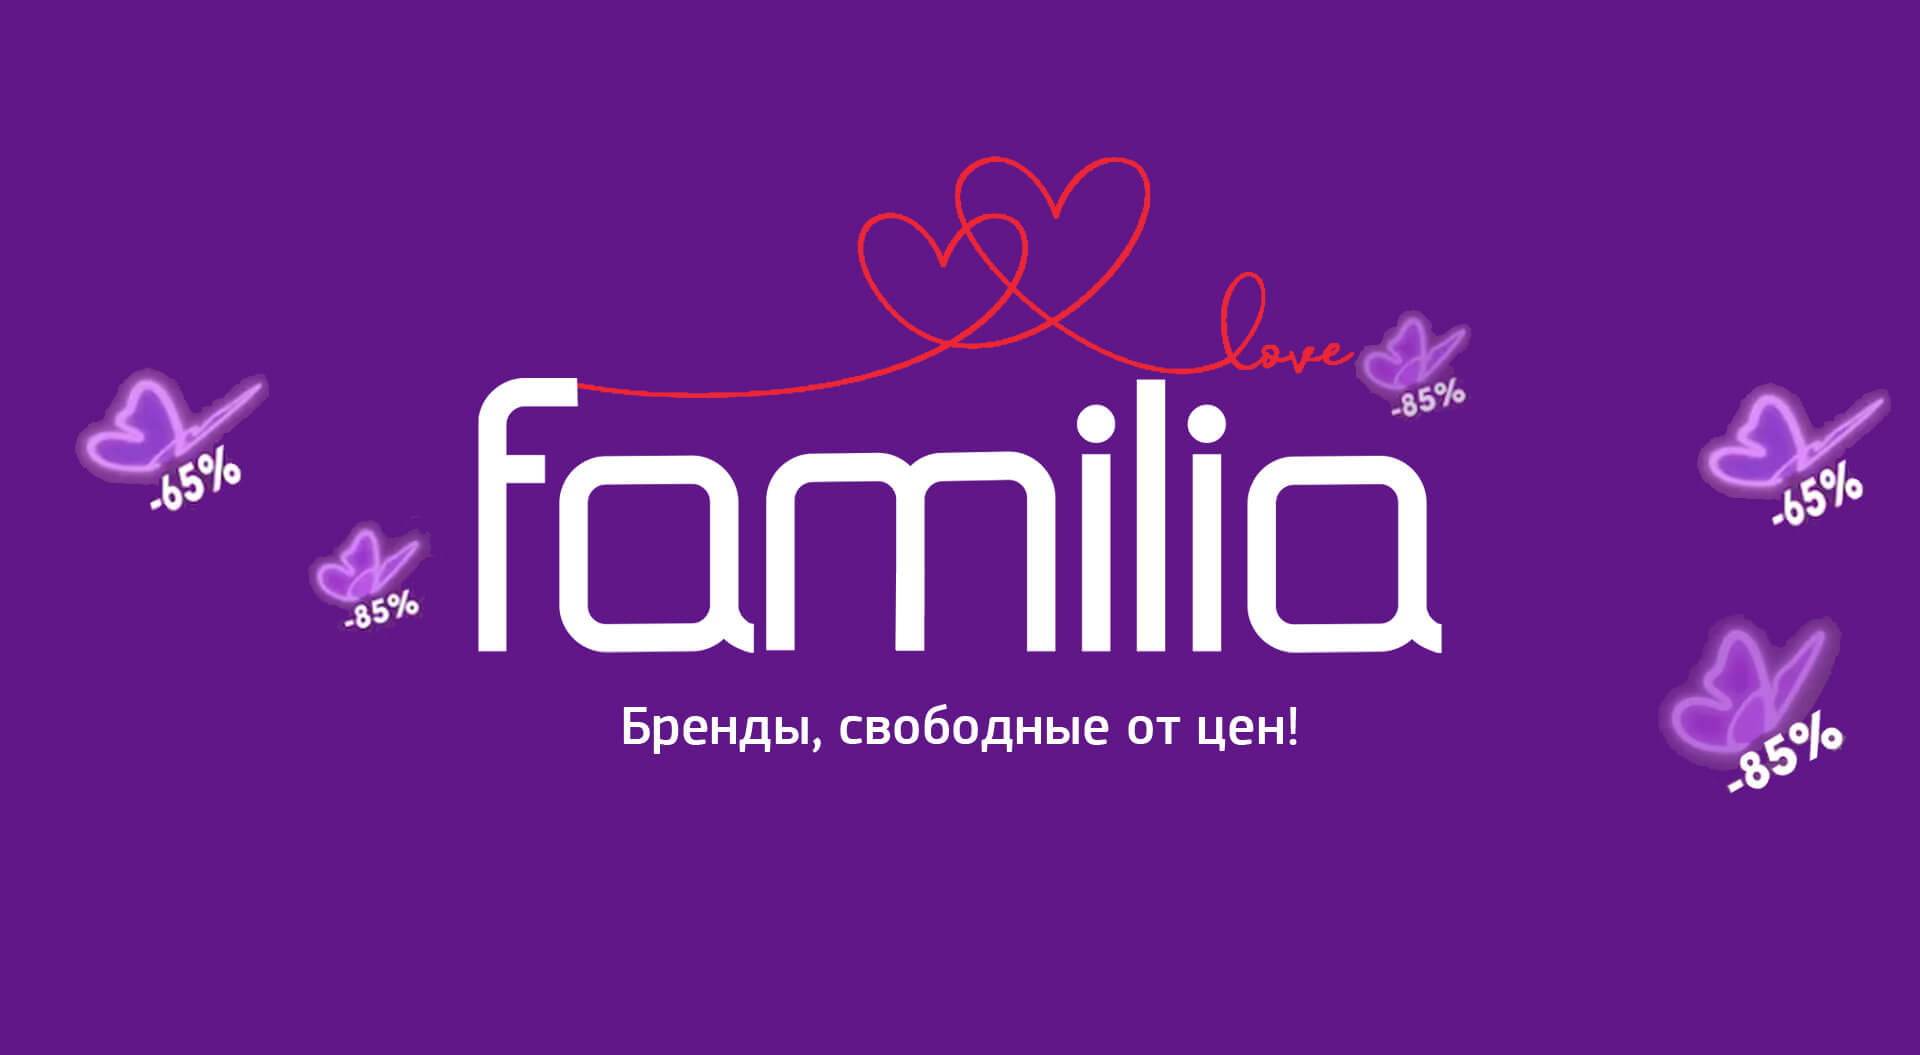 Familia Russia, Shop Front Fascia Signage, Retail Branding, Brand Identity, Store Interior Design, Graphic Communications - CampbellRigg Agency